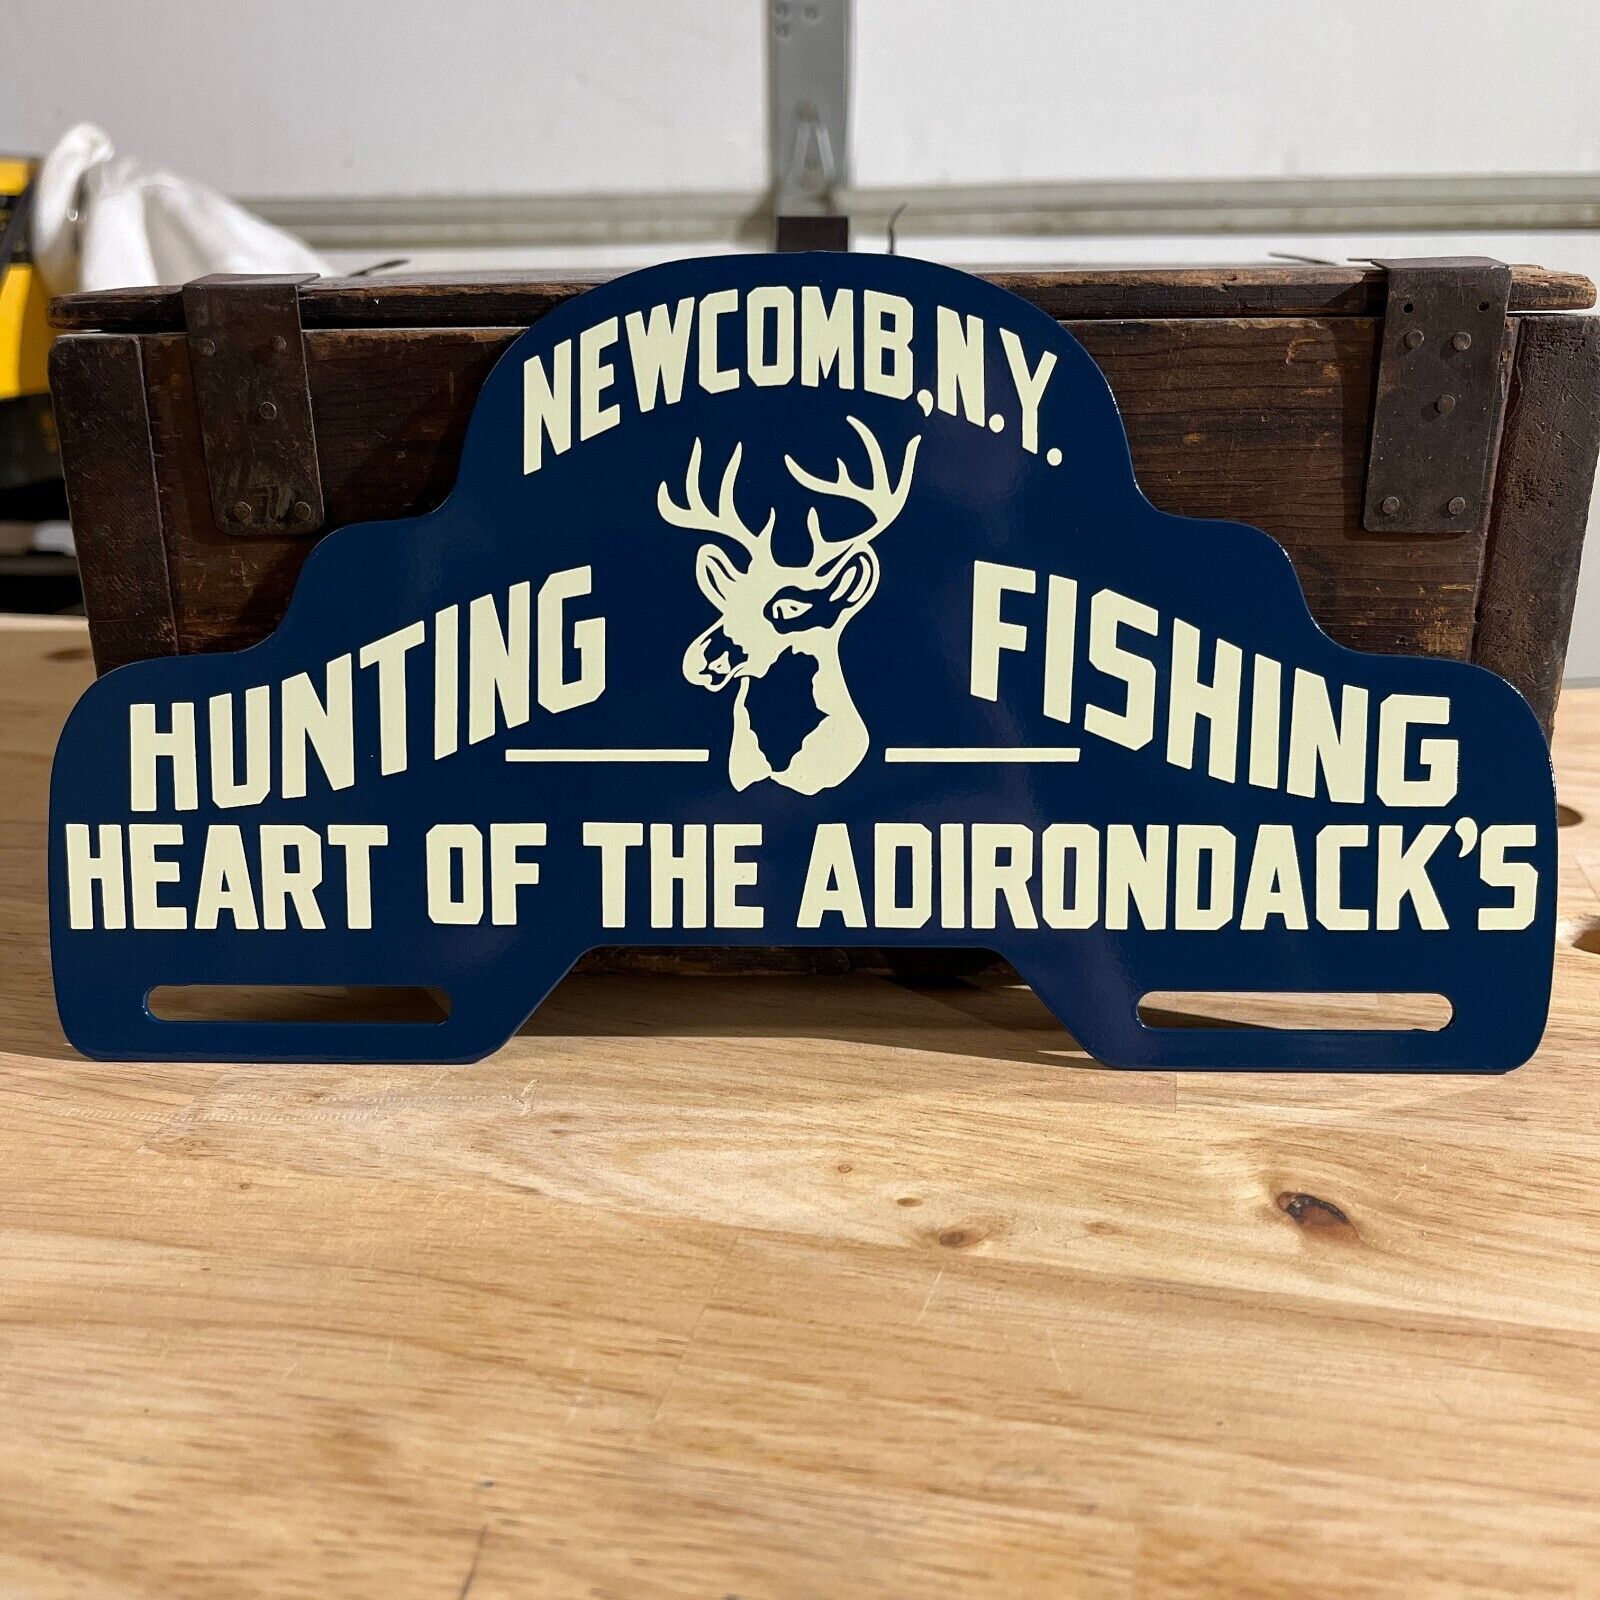 Newcomb New York Hunting Fishing Metal License Plate Tag Topper Sign Adirondacks